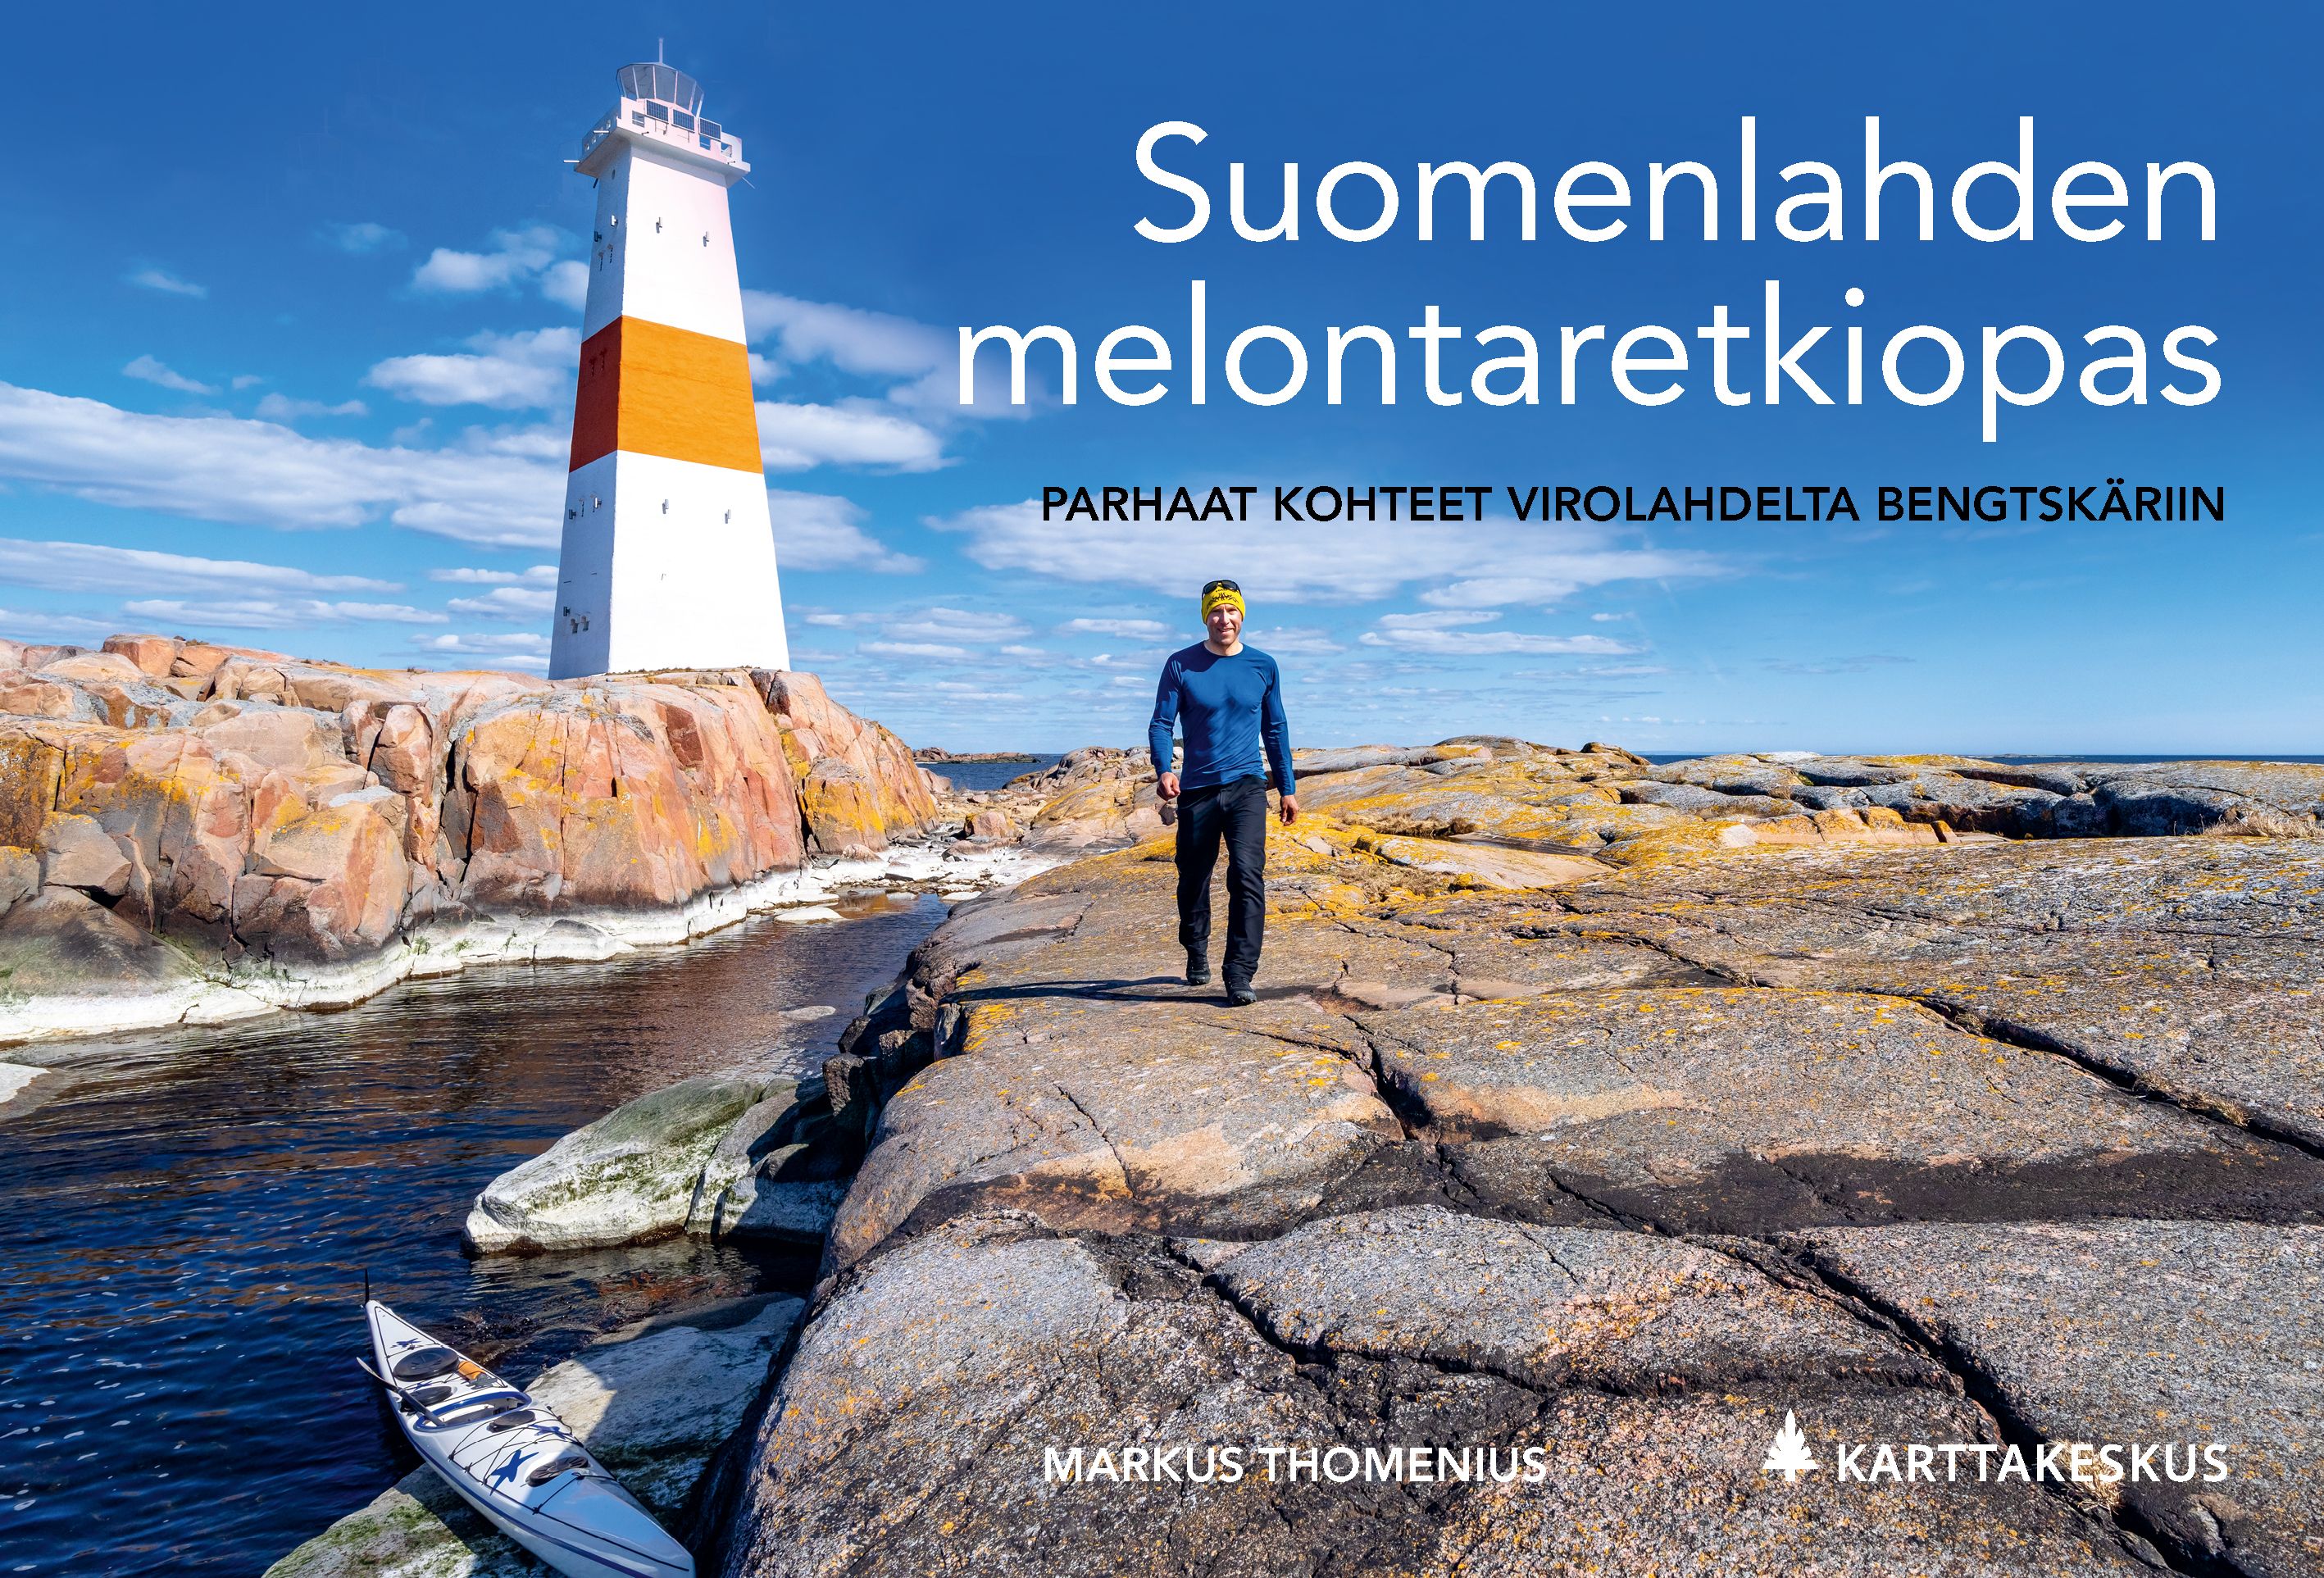 Markus Thomenius : Suomenlahden melontaretkiopas